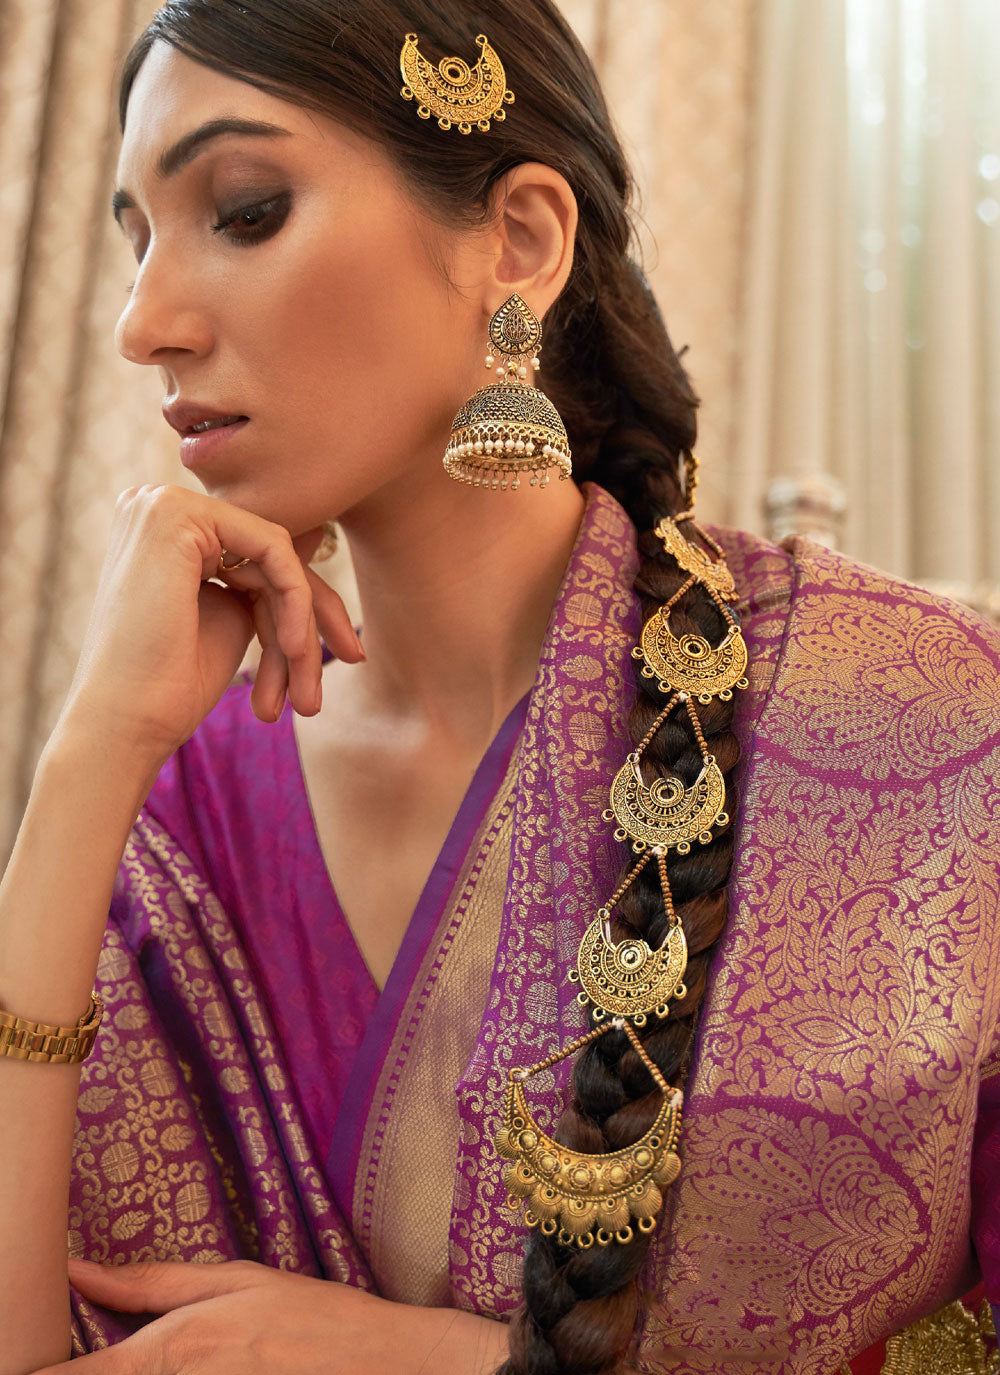 Handloom Silk Purple Traditional Designer Saree